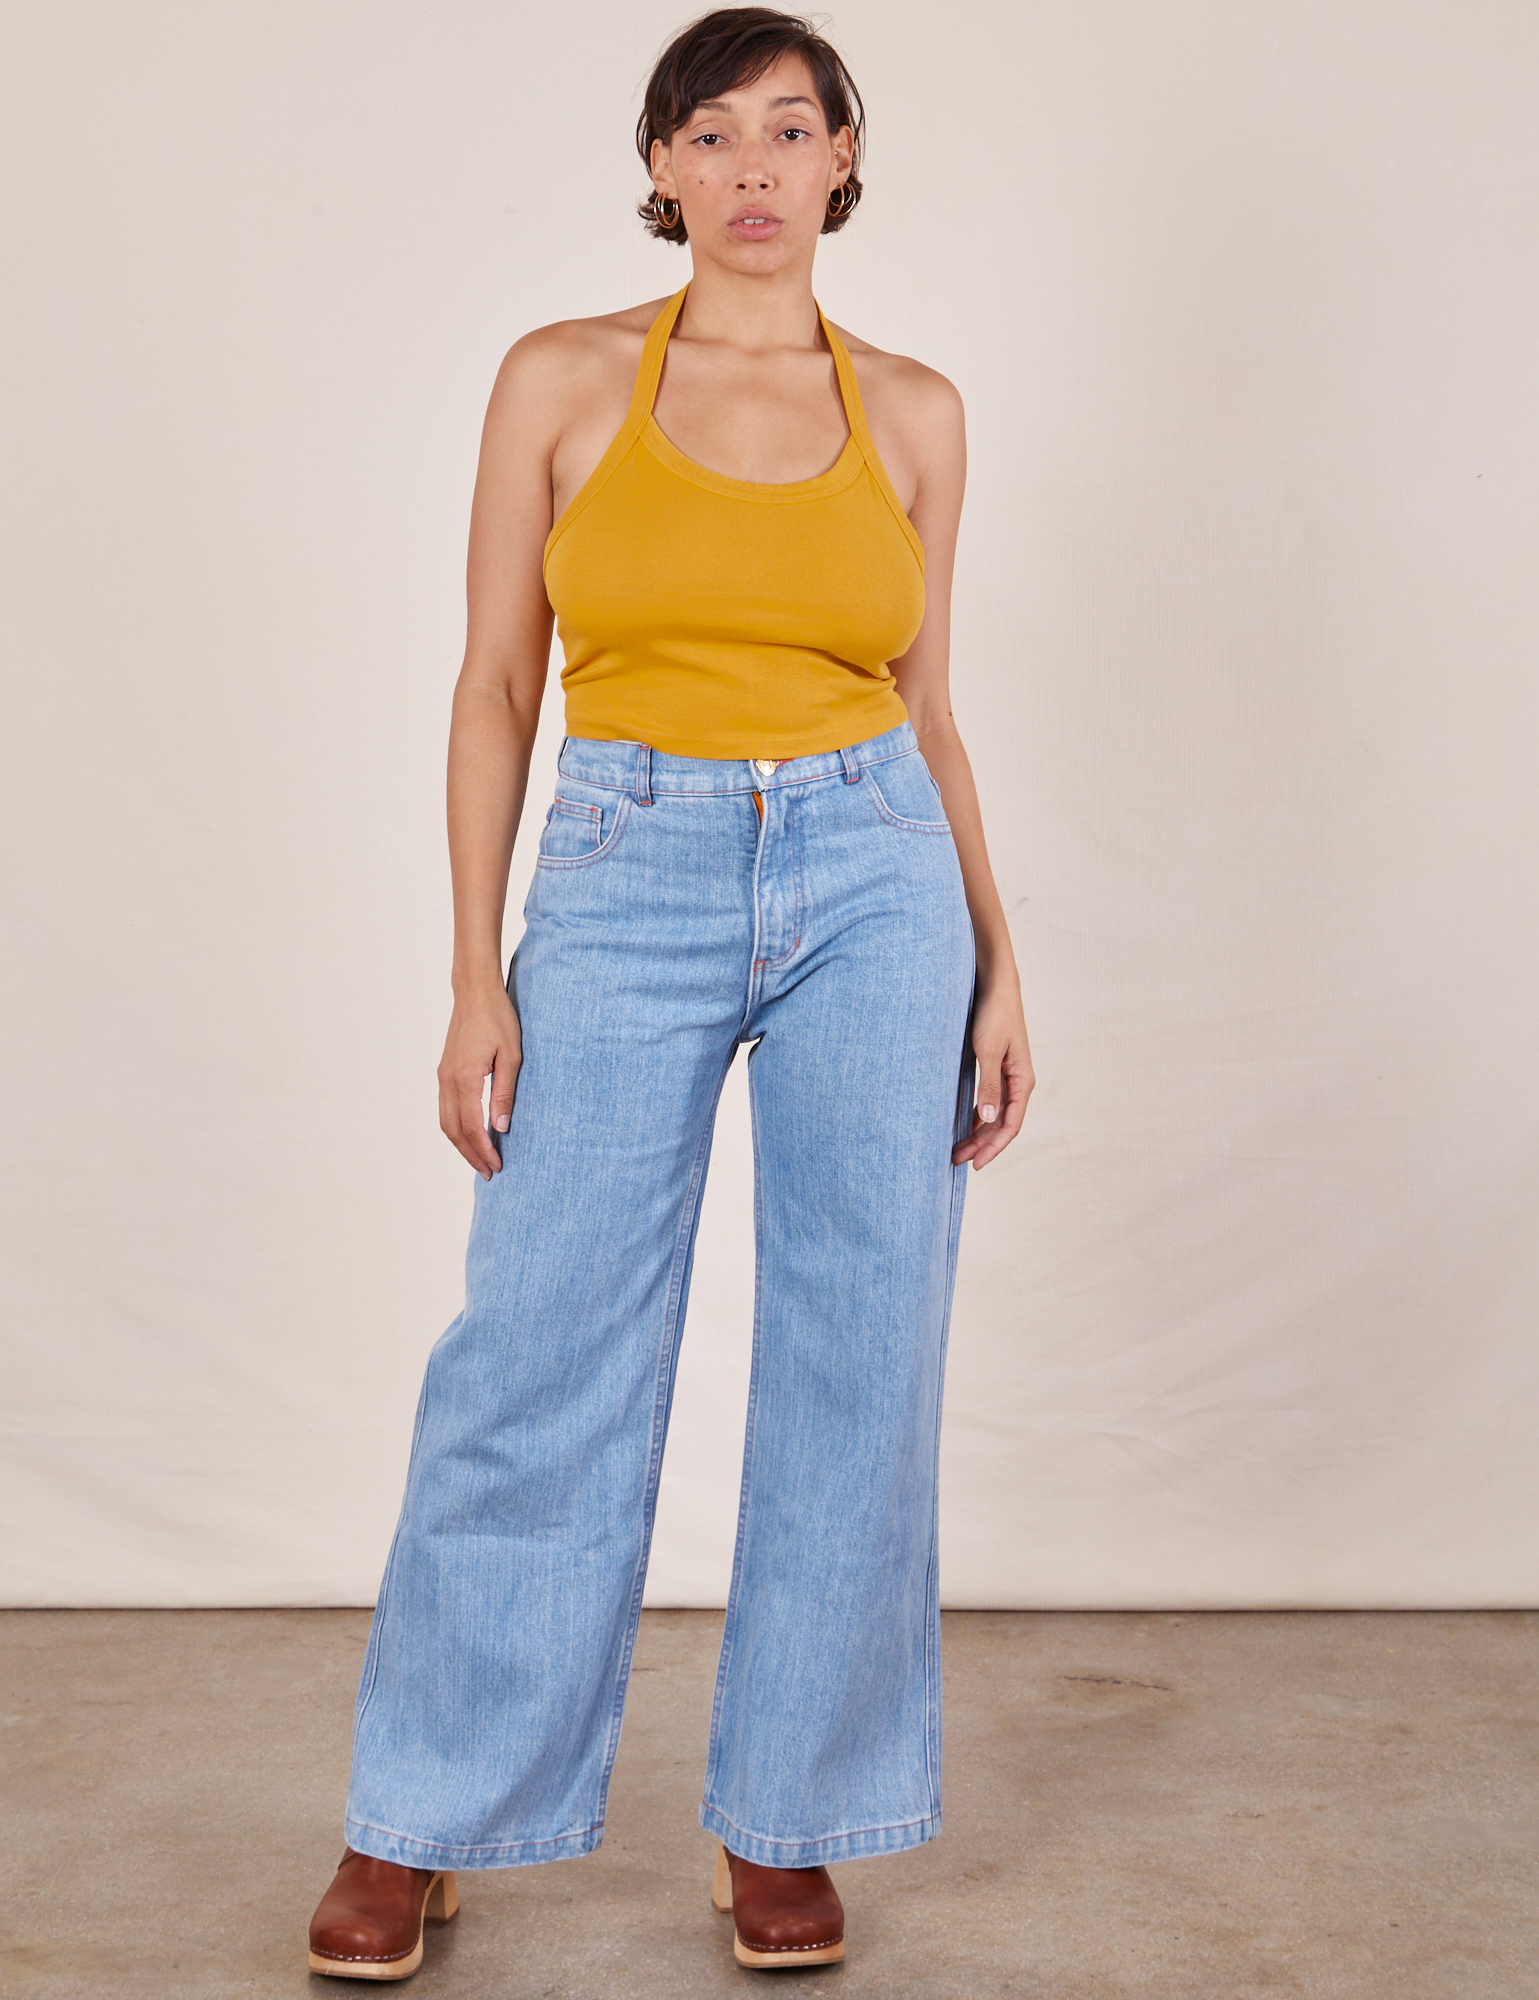 Zara Women's Light Wash High Rise Sailor Jeans Size L